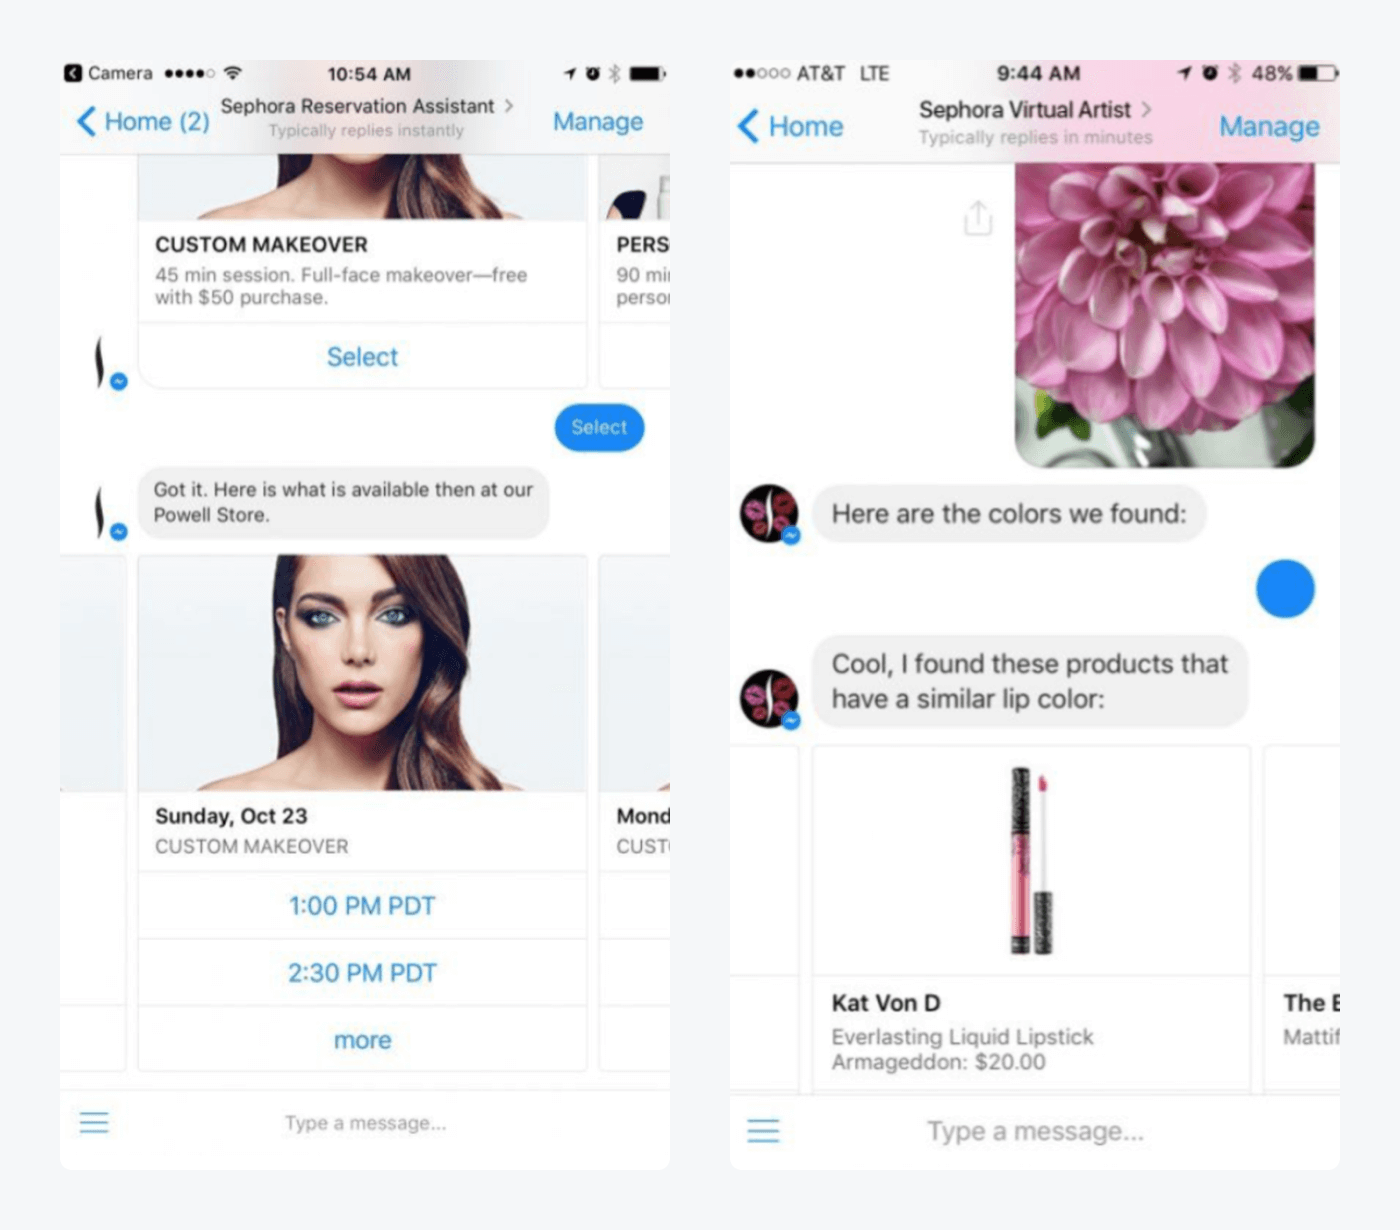 Sephora's chatbot widget